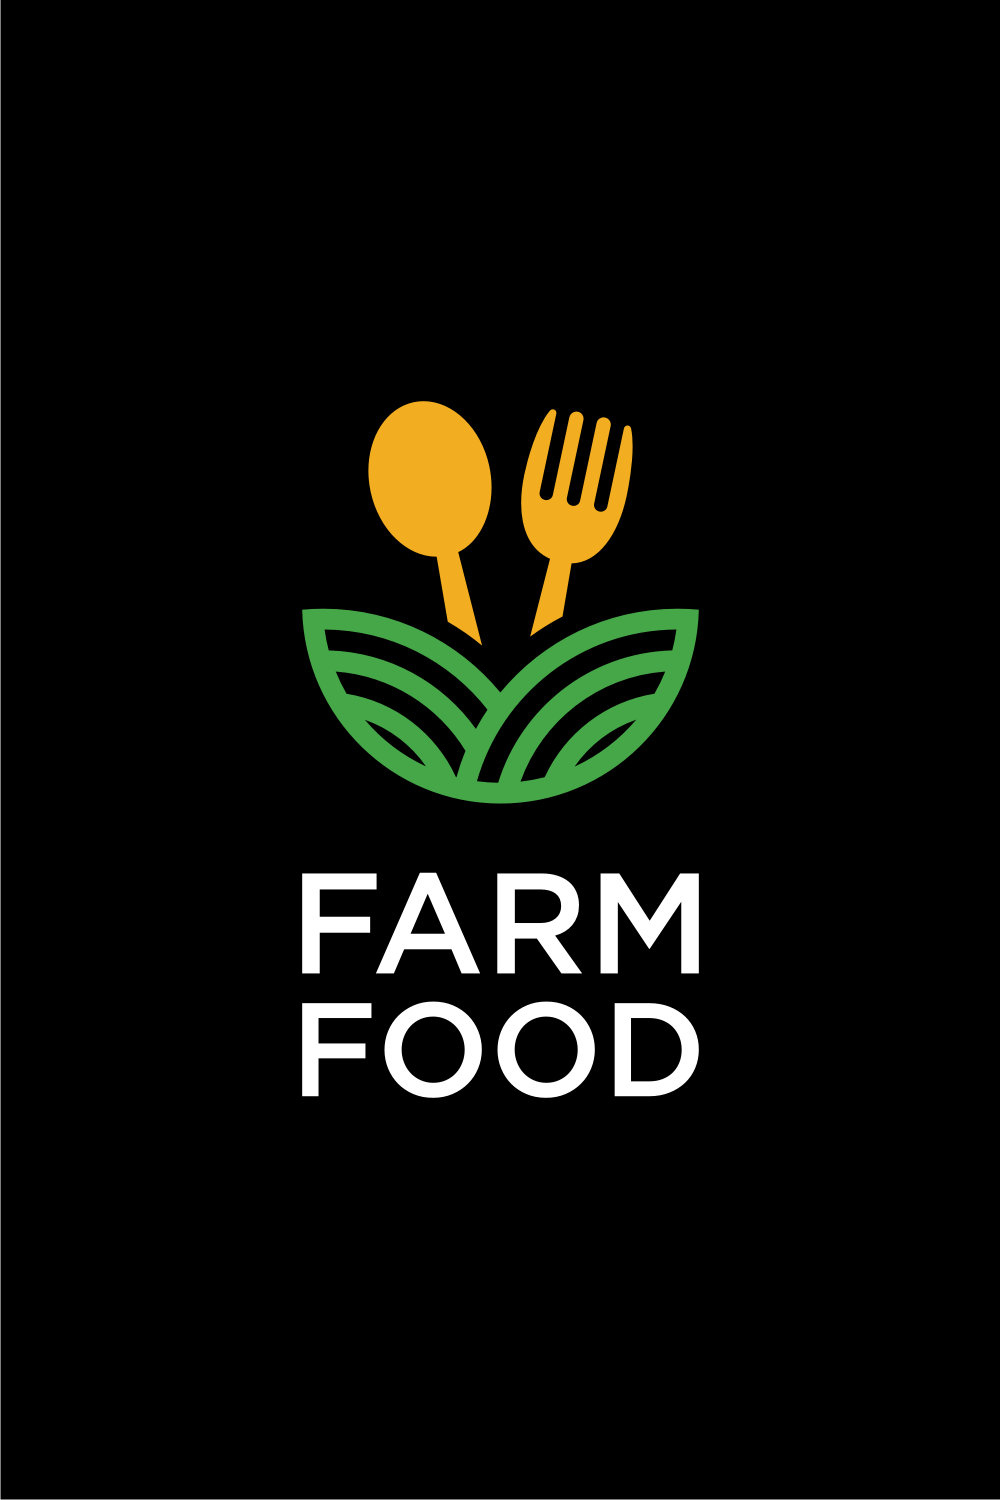 Farm Food Logo Design Vector pinterest image.